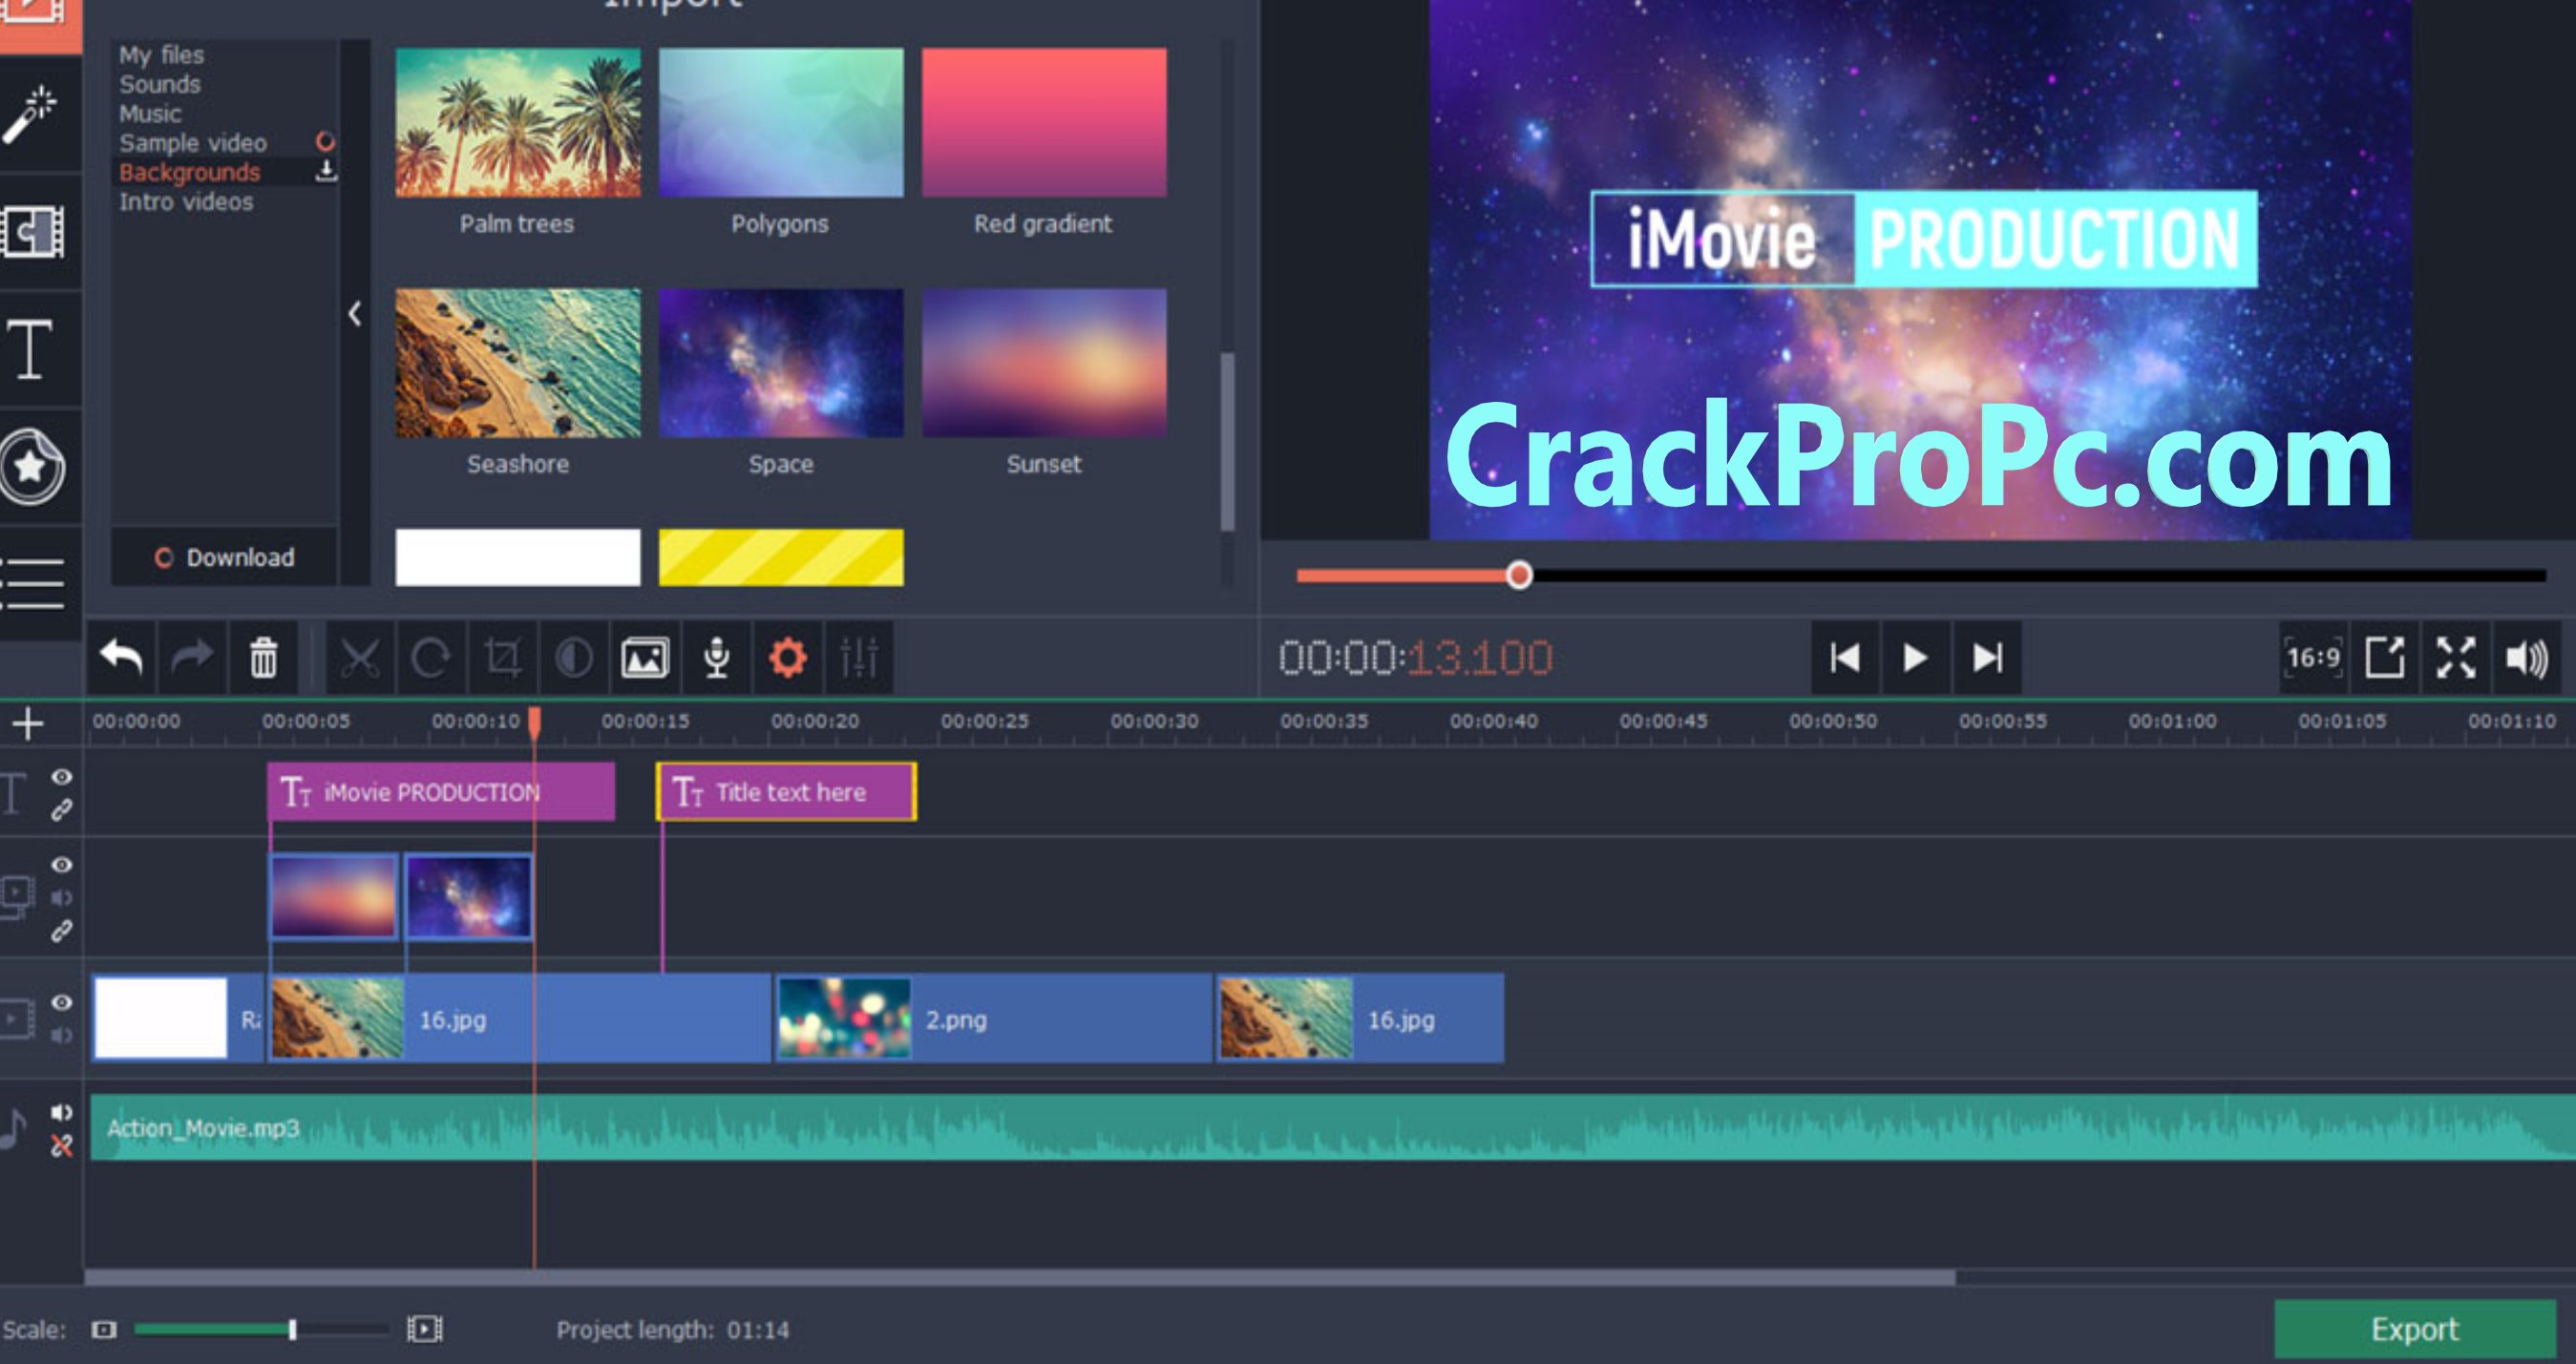 iMovie 10.3.4 Crack Win + Mac Full Latest Version Free Download 2022